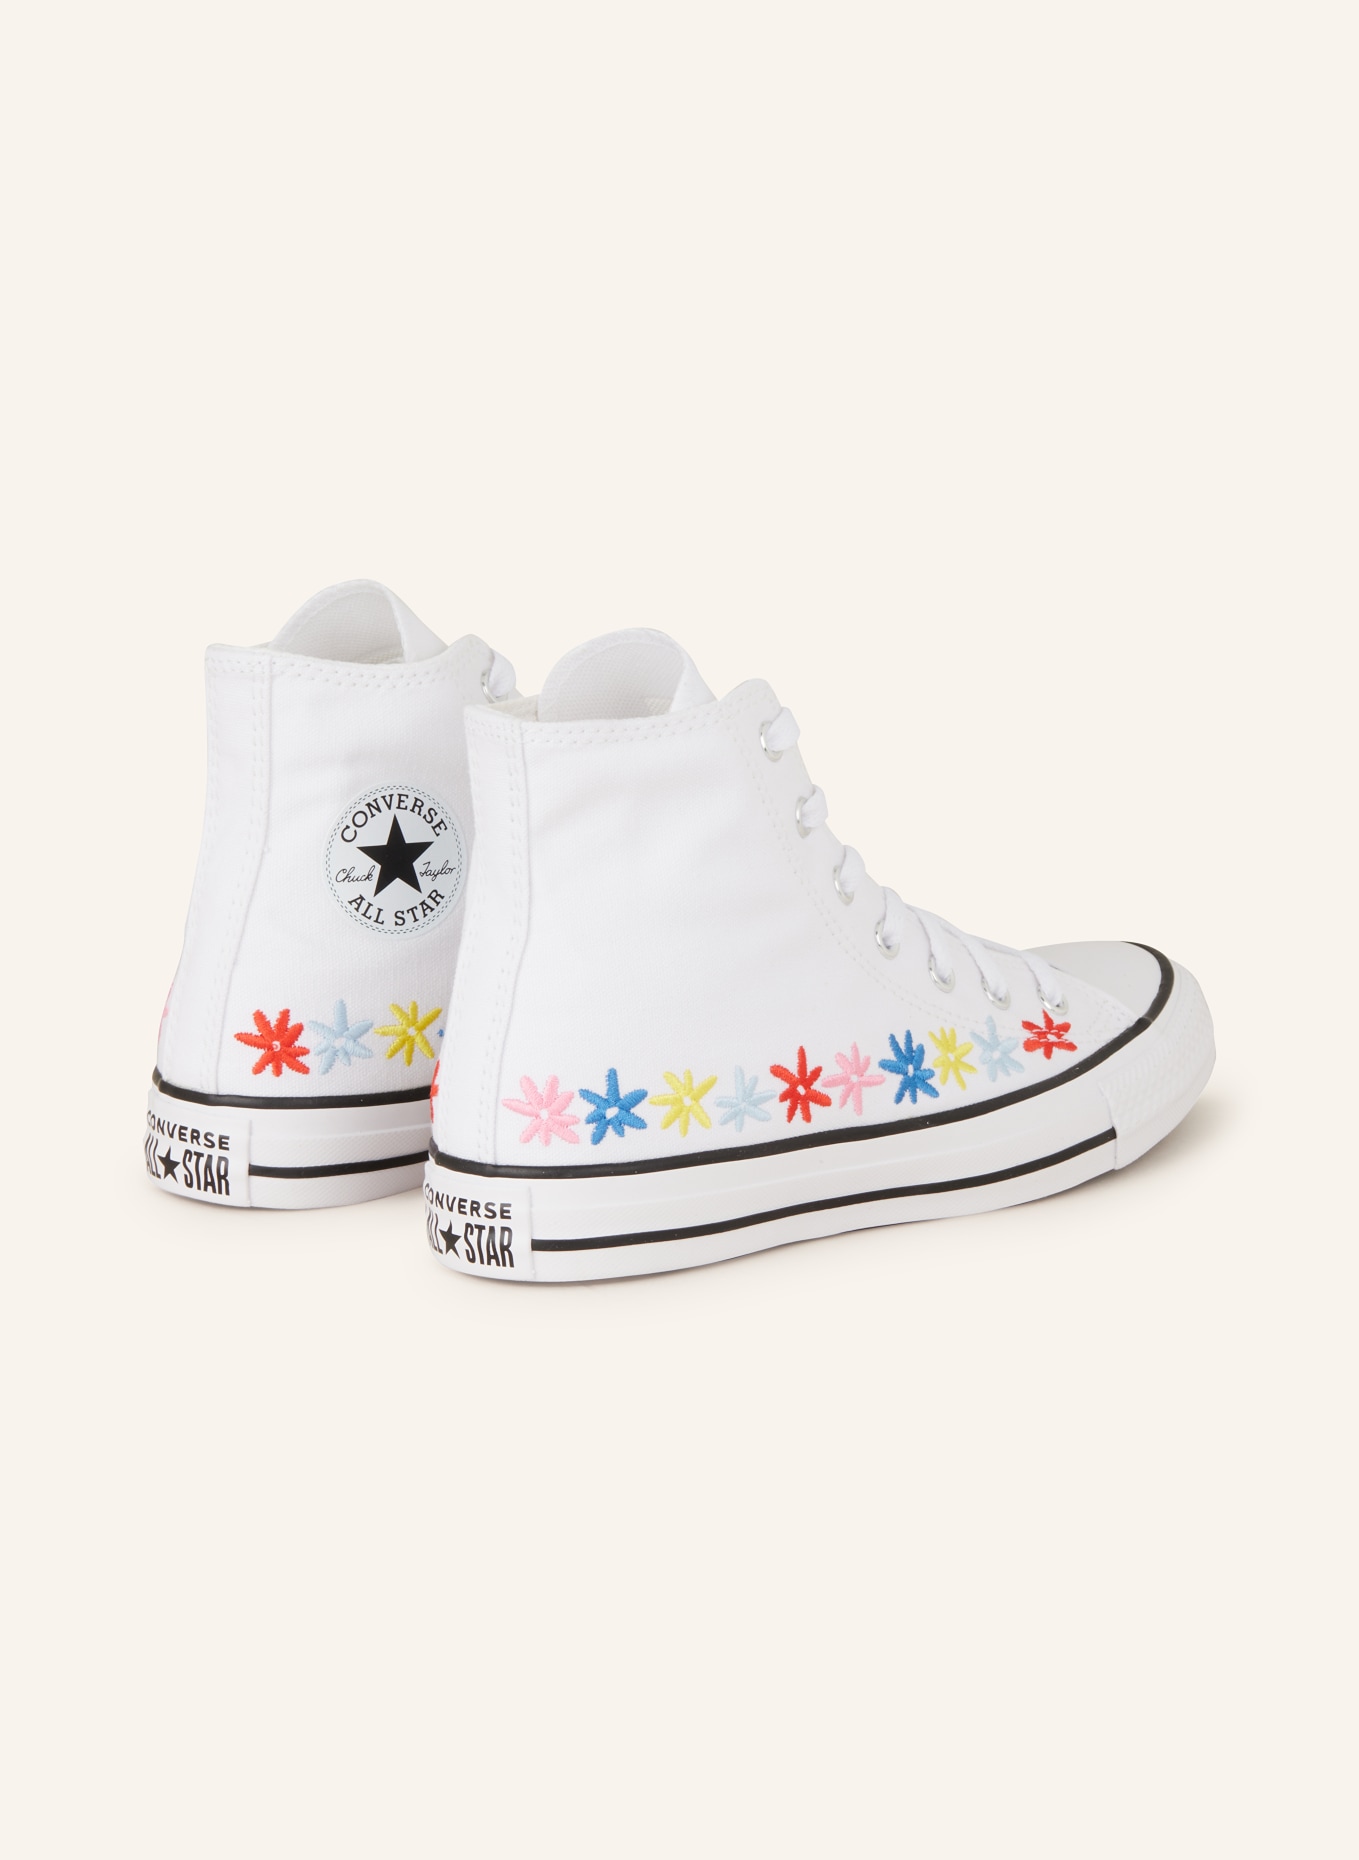 CONVERSE Hightop-Sneaker CHUCK TAYLOR ALL STAR, Farbe: WEISS/ ROT/ HELLBLAU (Bild 2)